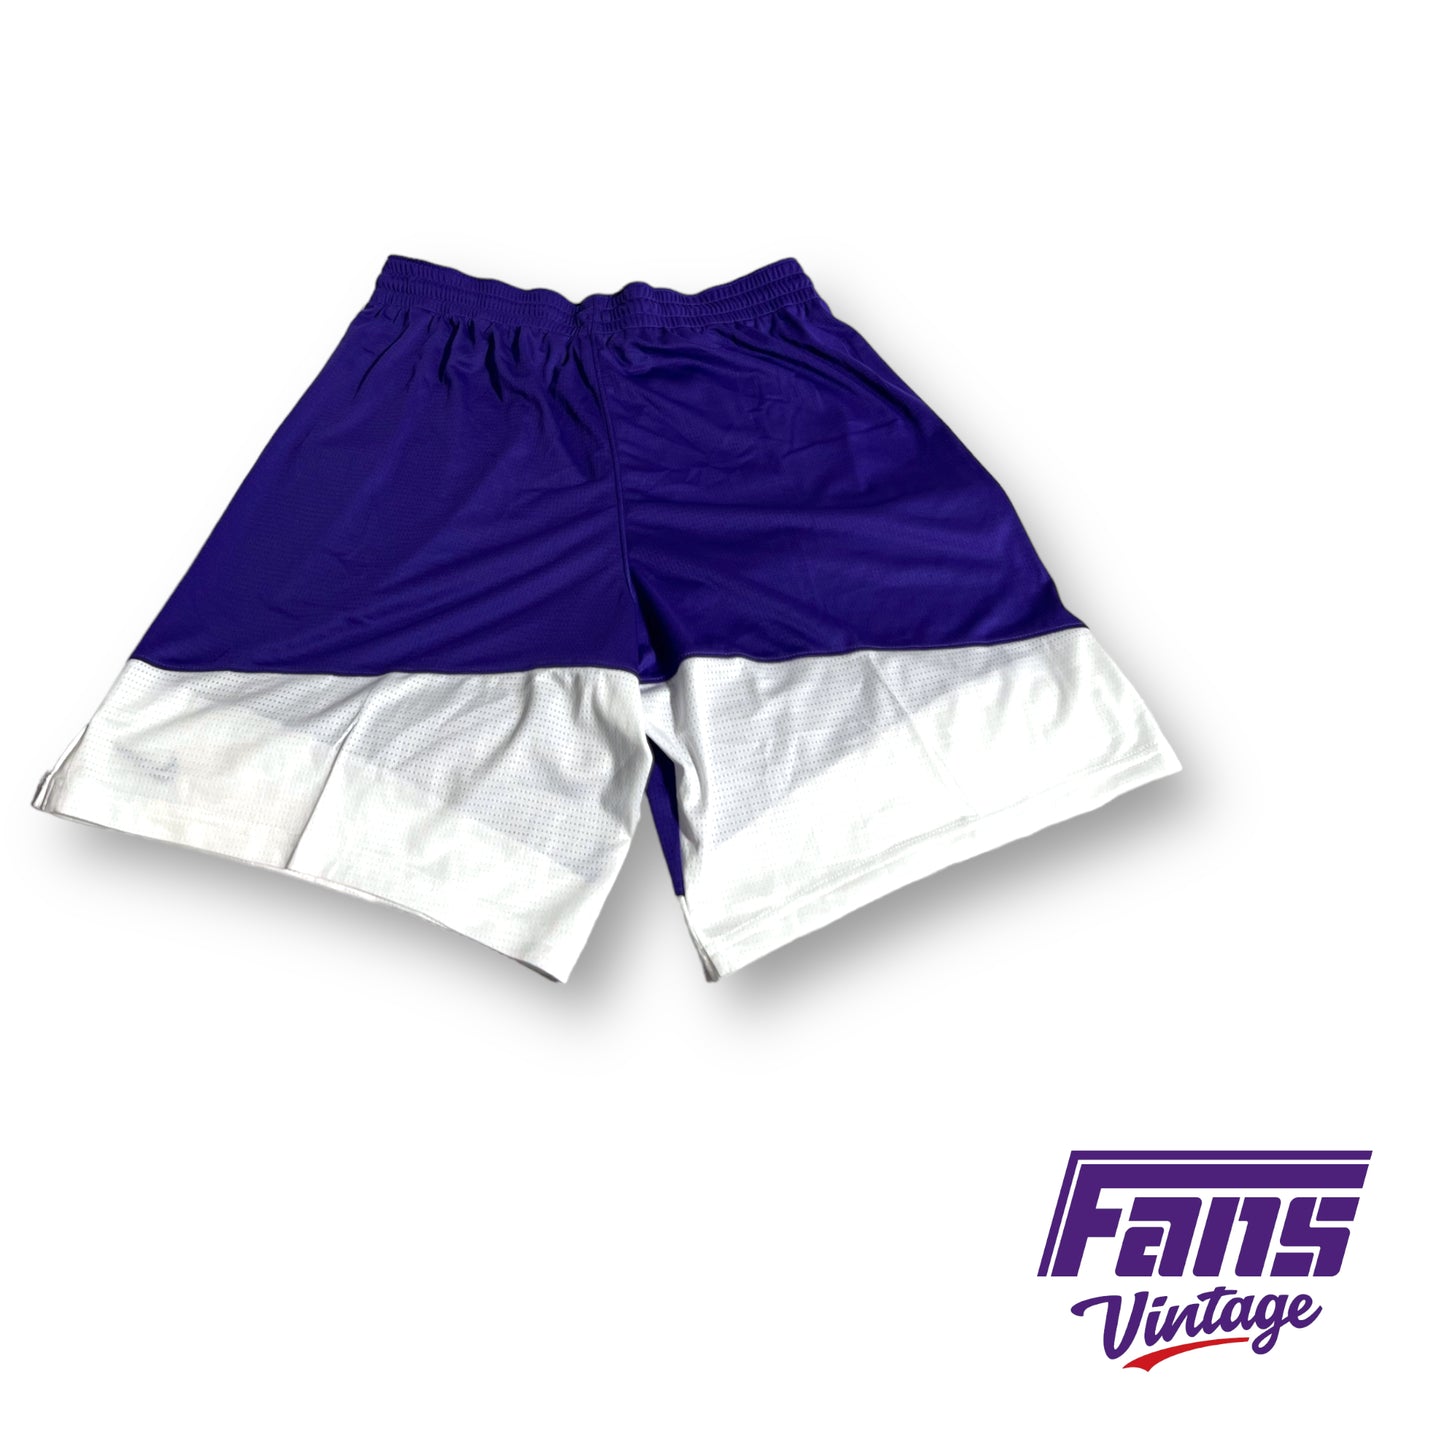 Team Issue Nike purple/white dri-fit shorts